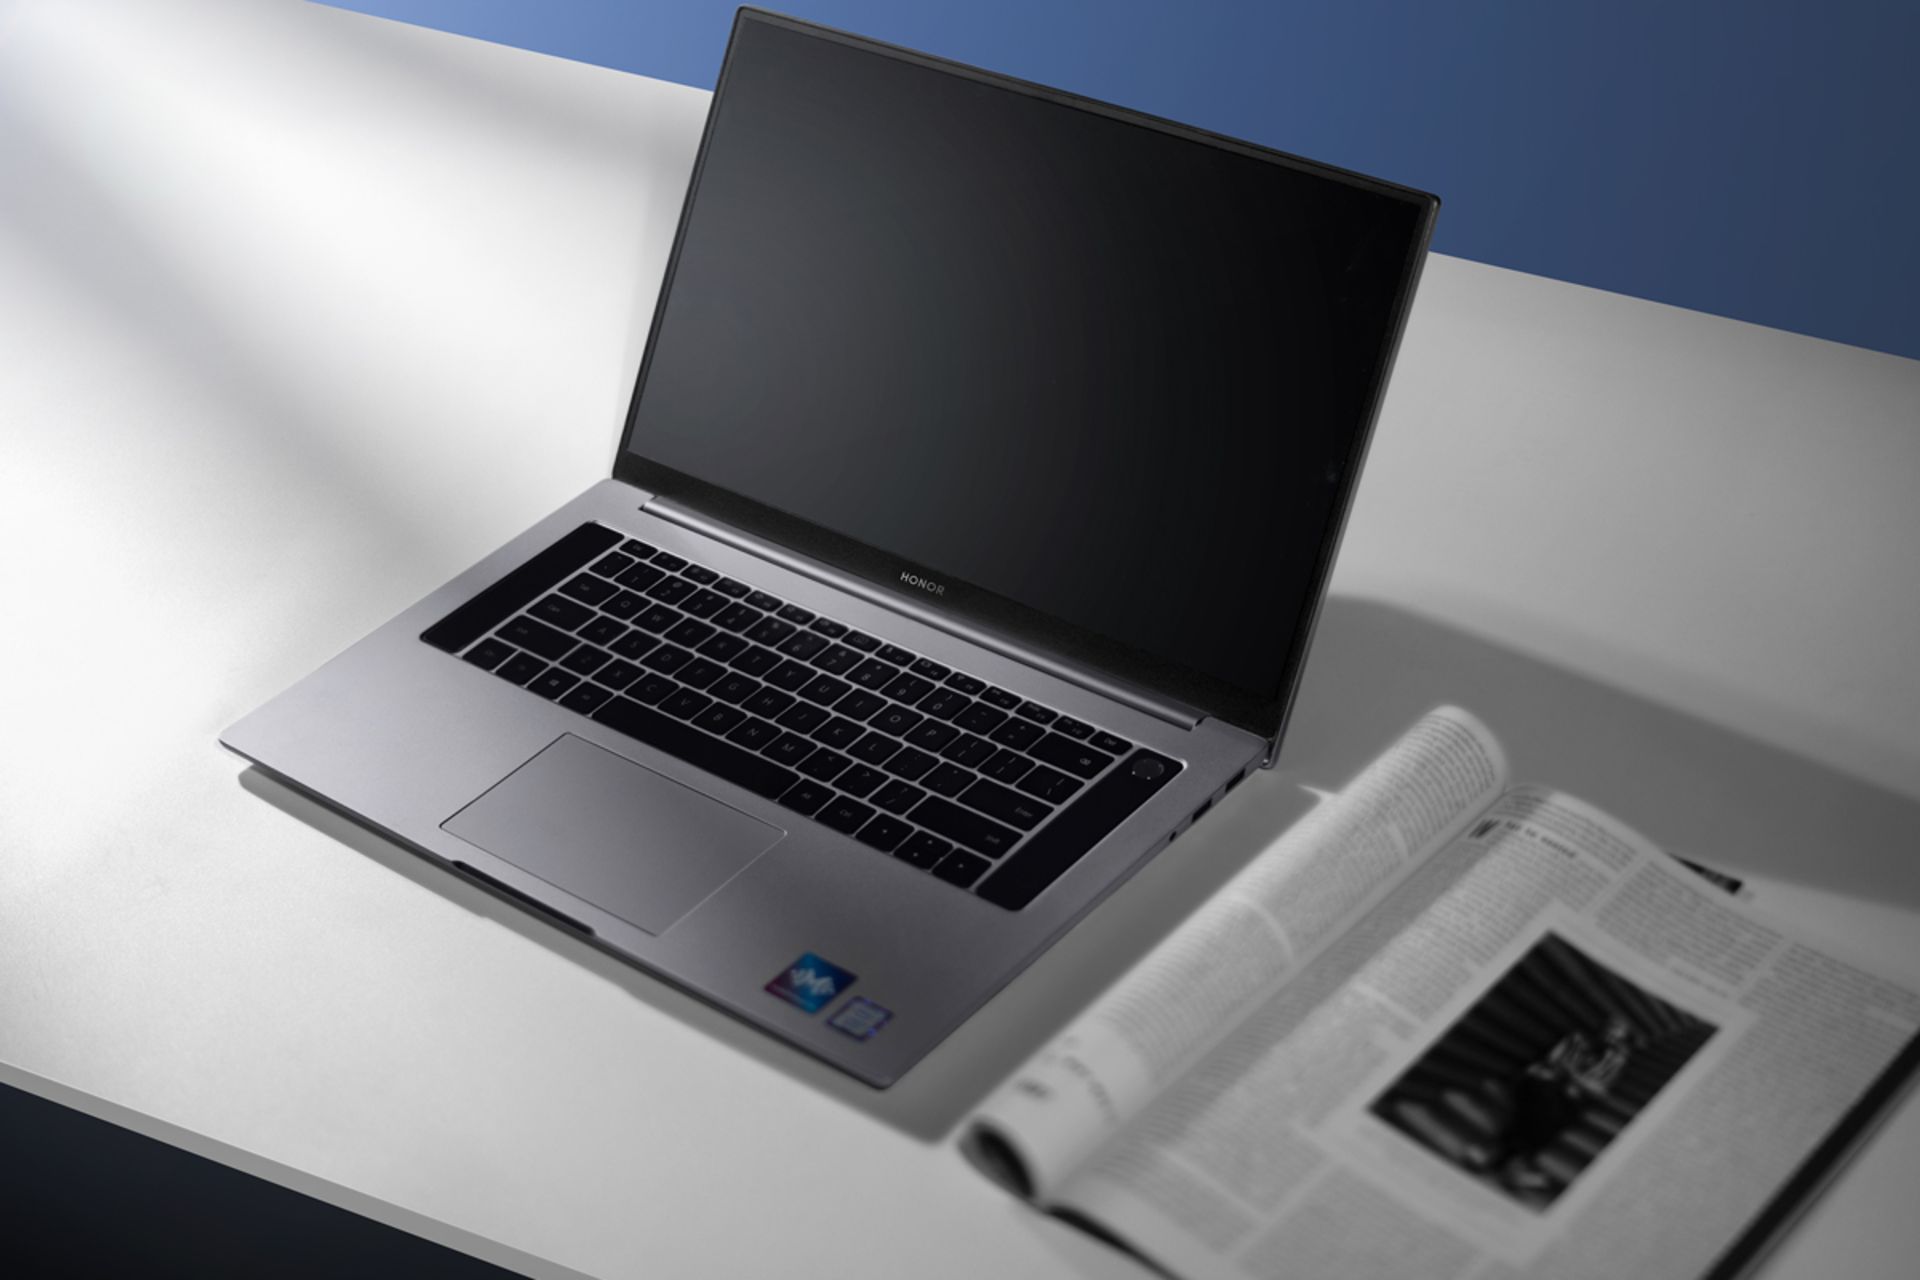 مرجع متخصصين ايران آنر مجيك بوك پرو / MagicBook Pro نماي جلو روي ميز